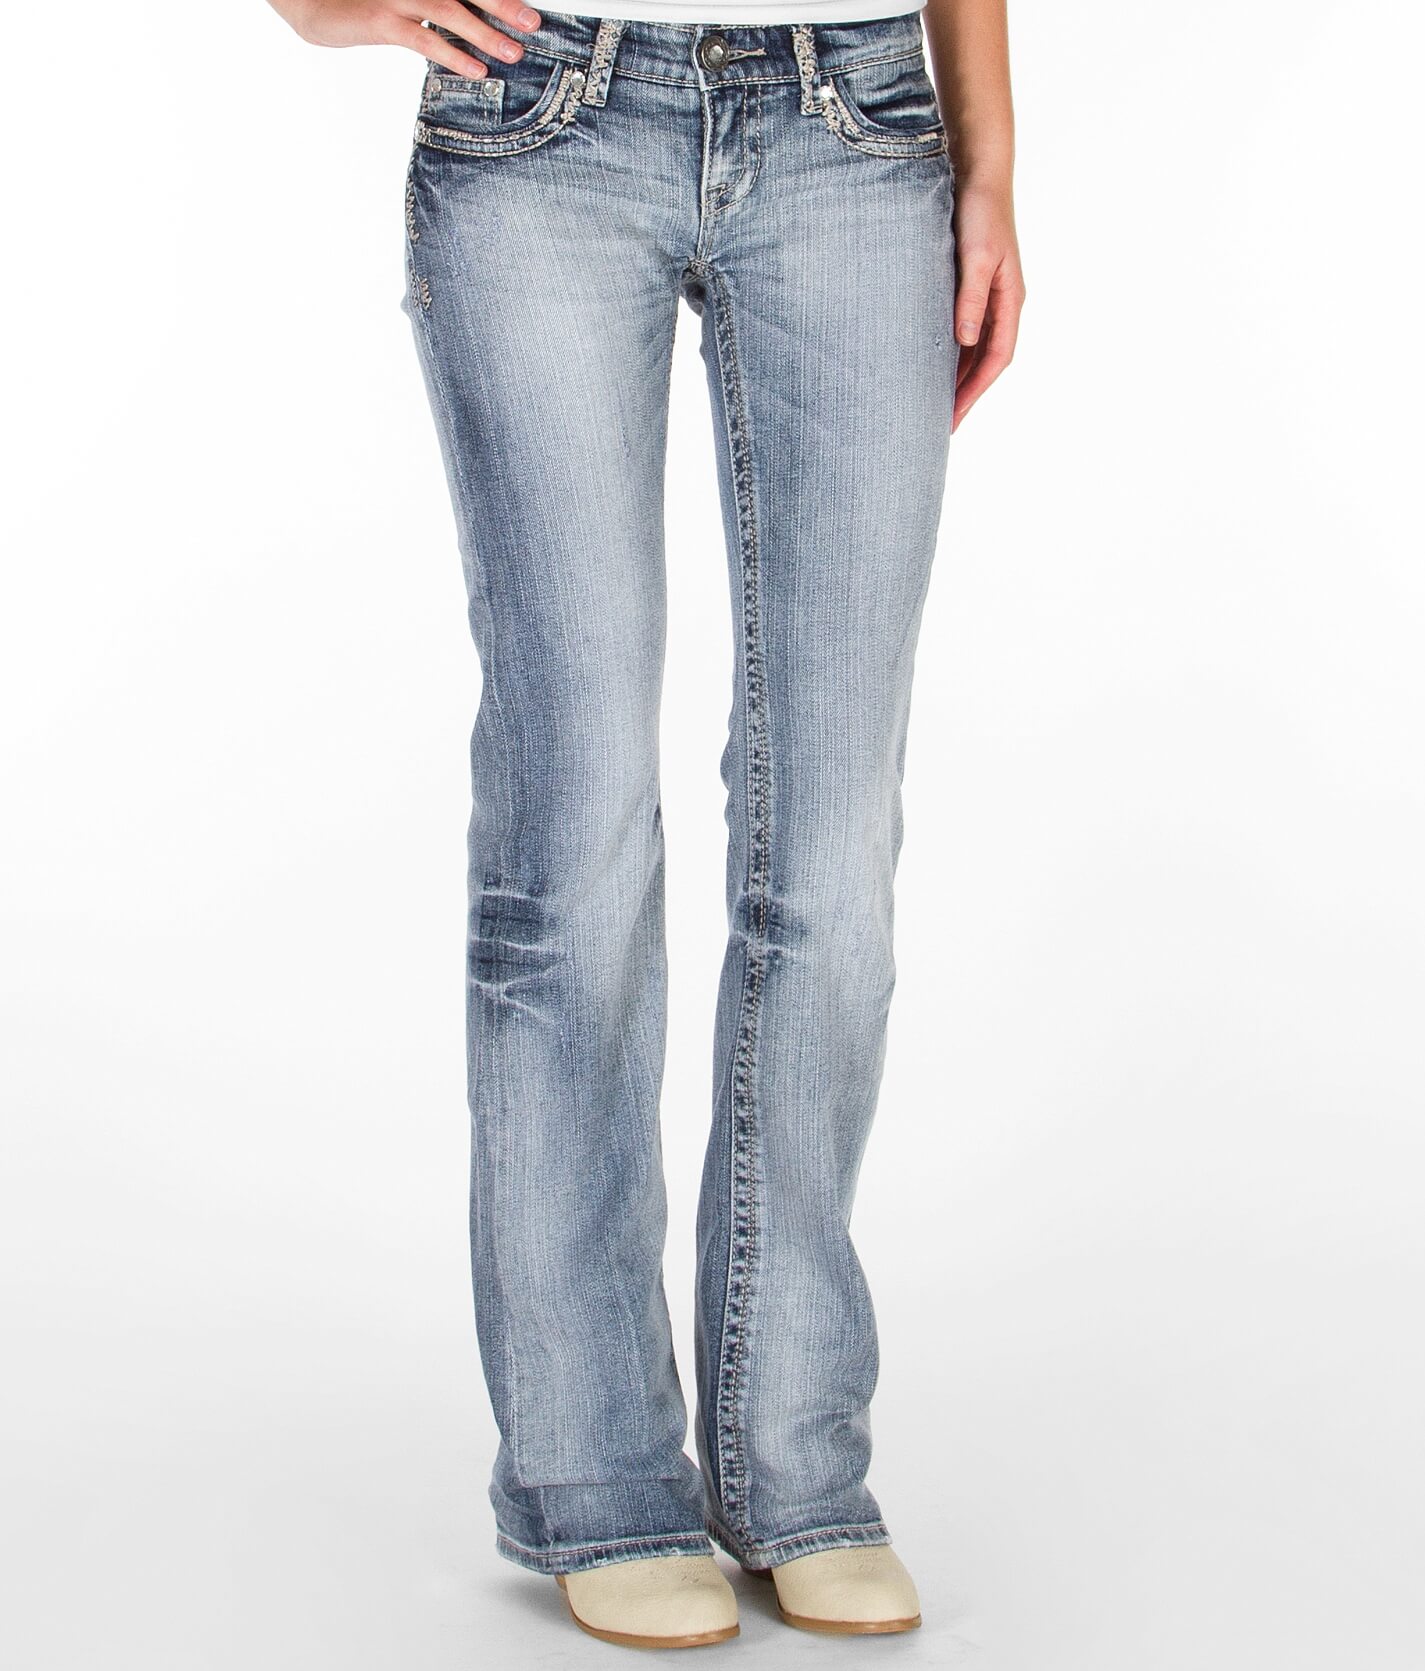 daytrip women's jeans